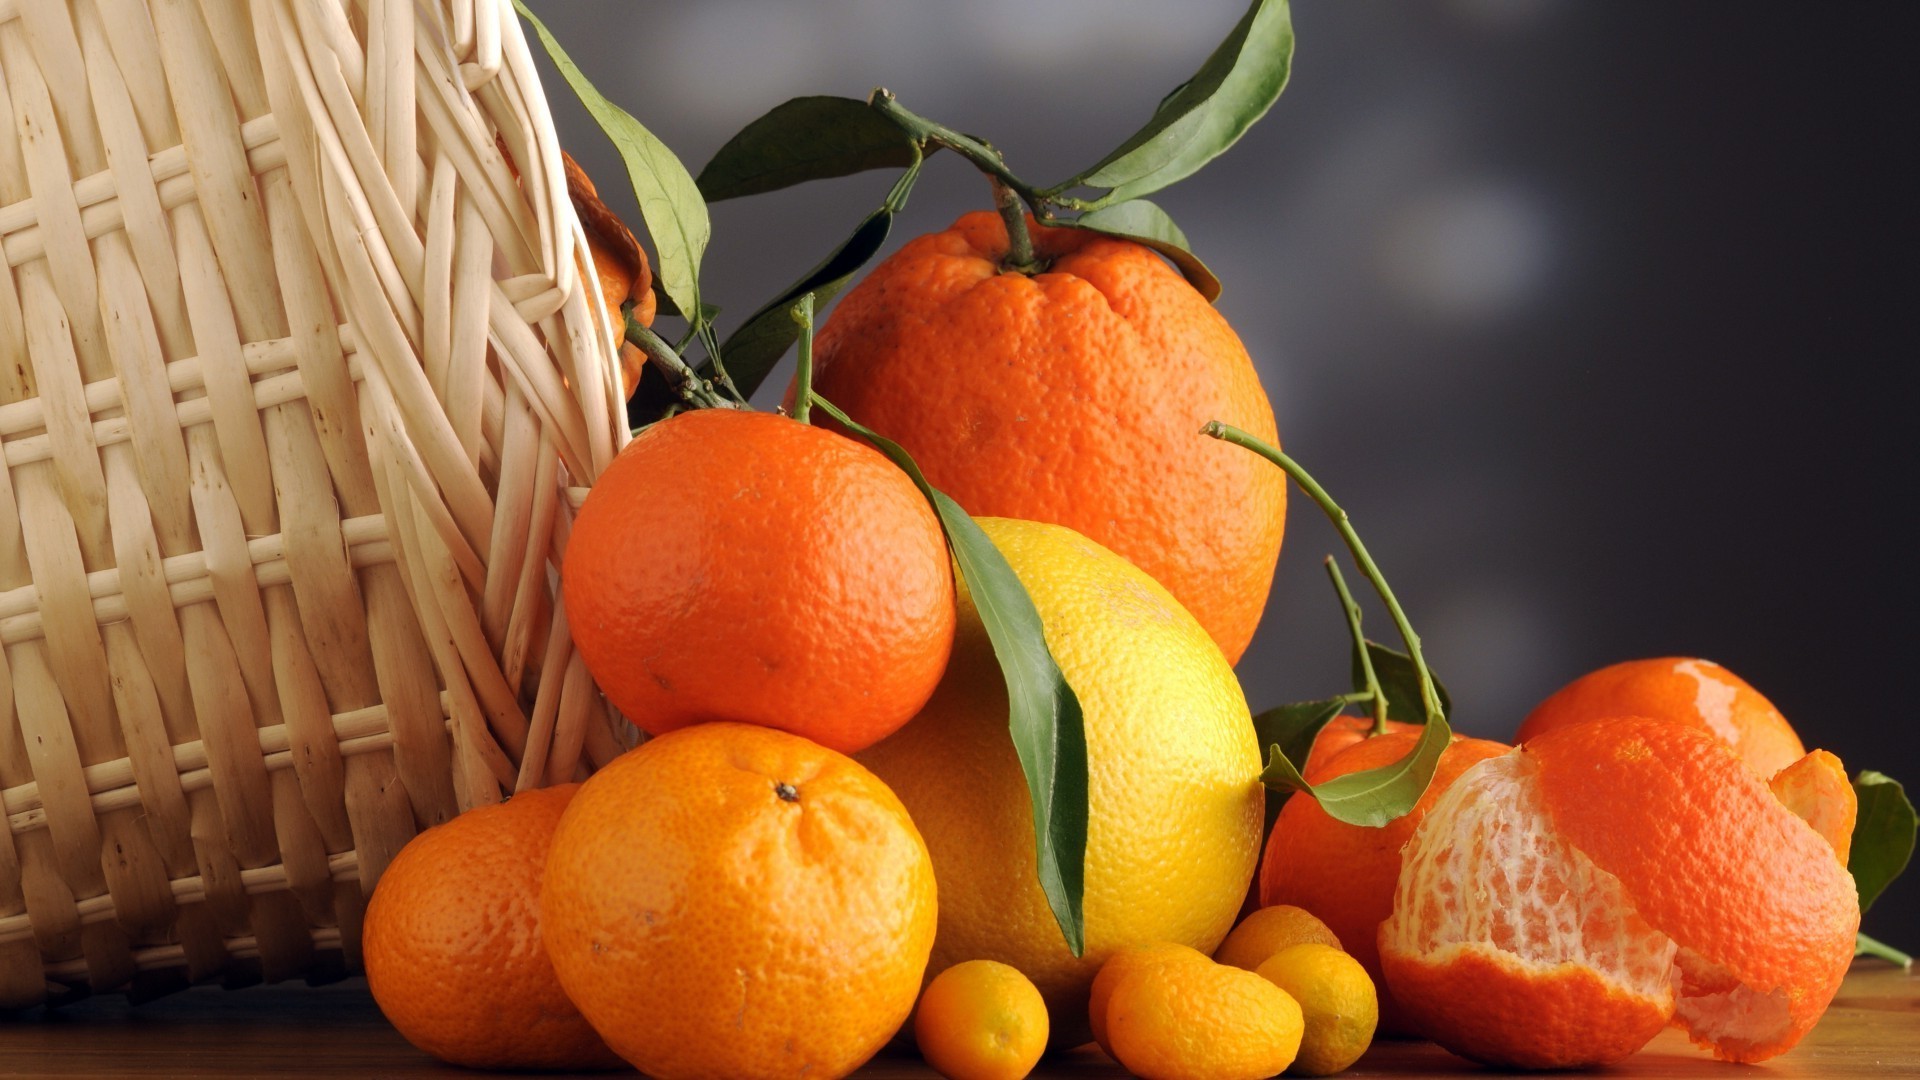 fruit food citrus mandarin tangerine juicy health confection healthy juice leaf market tropical agriculture nutrition